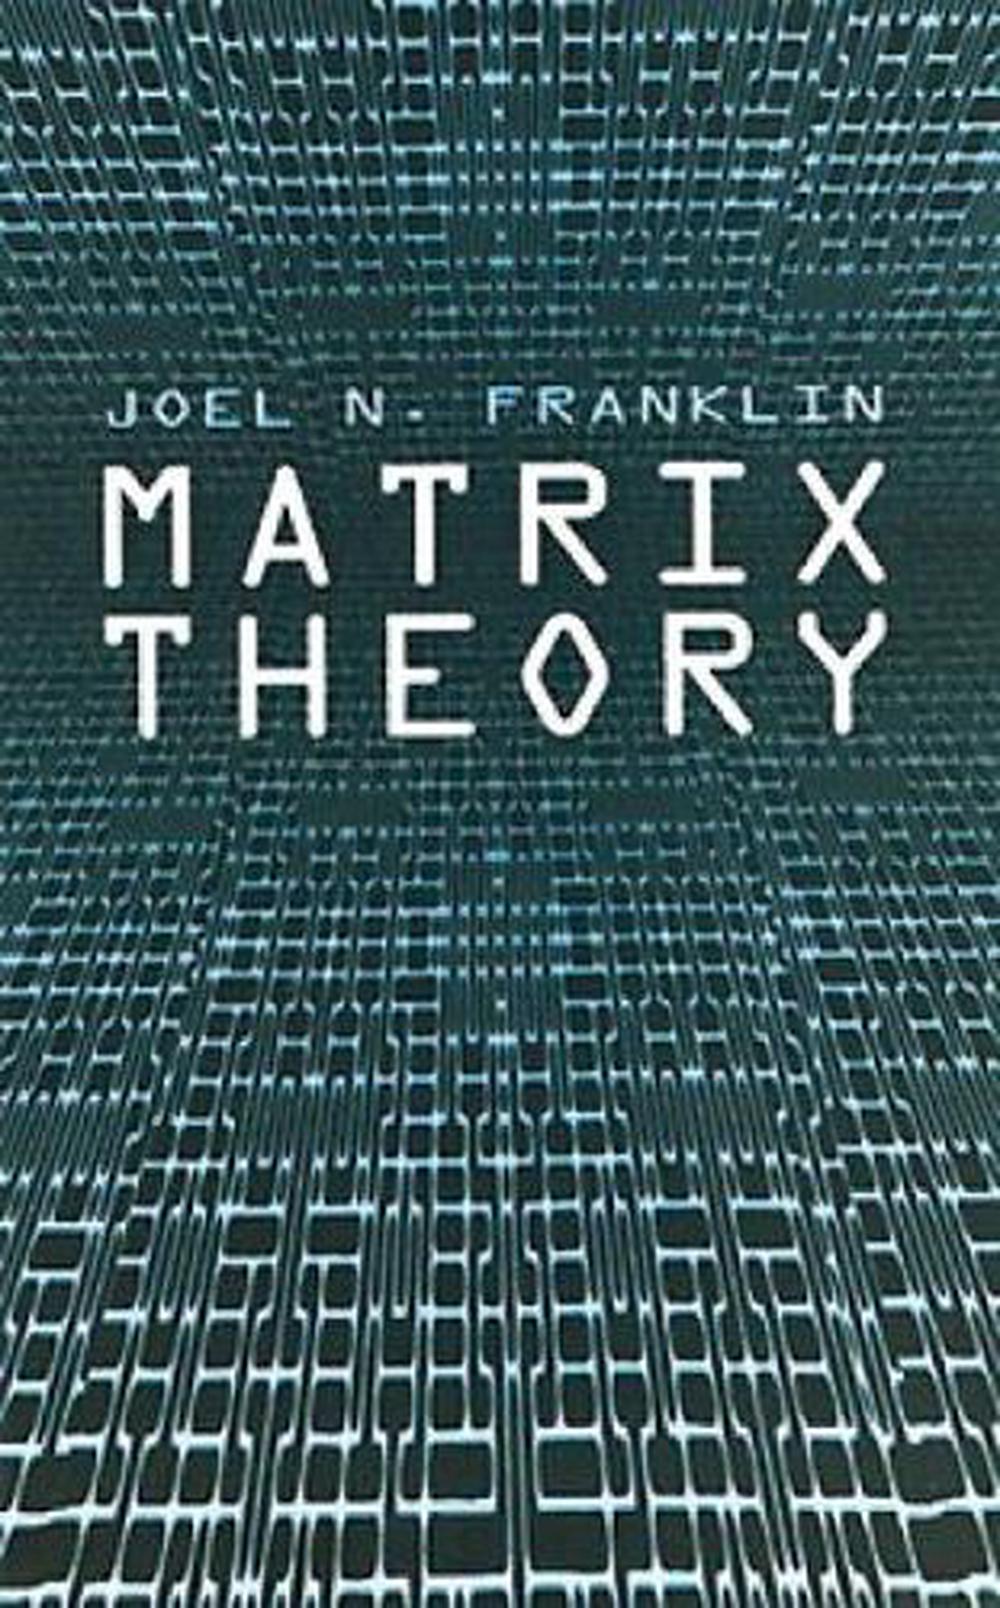 the matrix book review